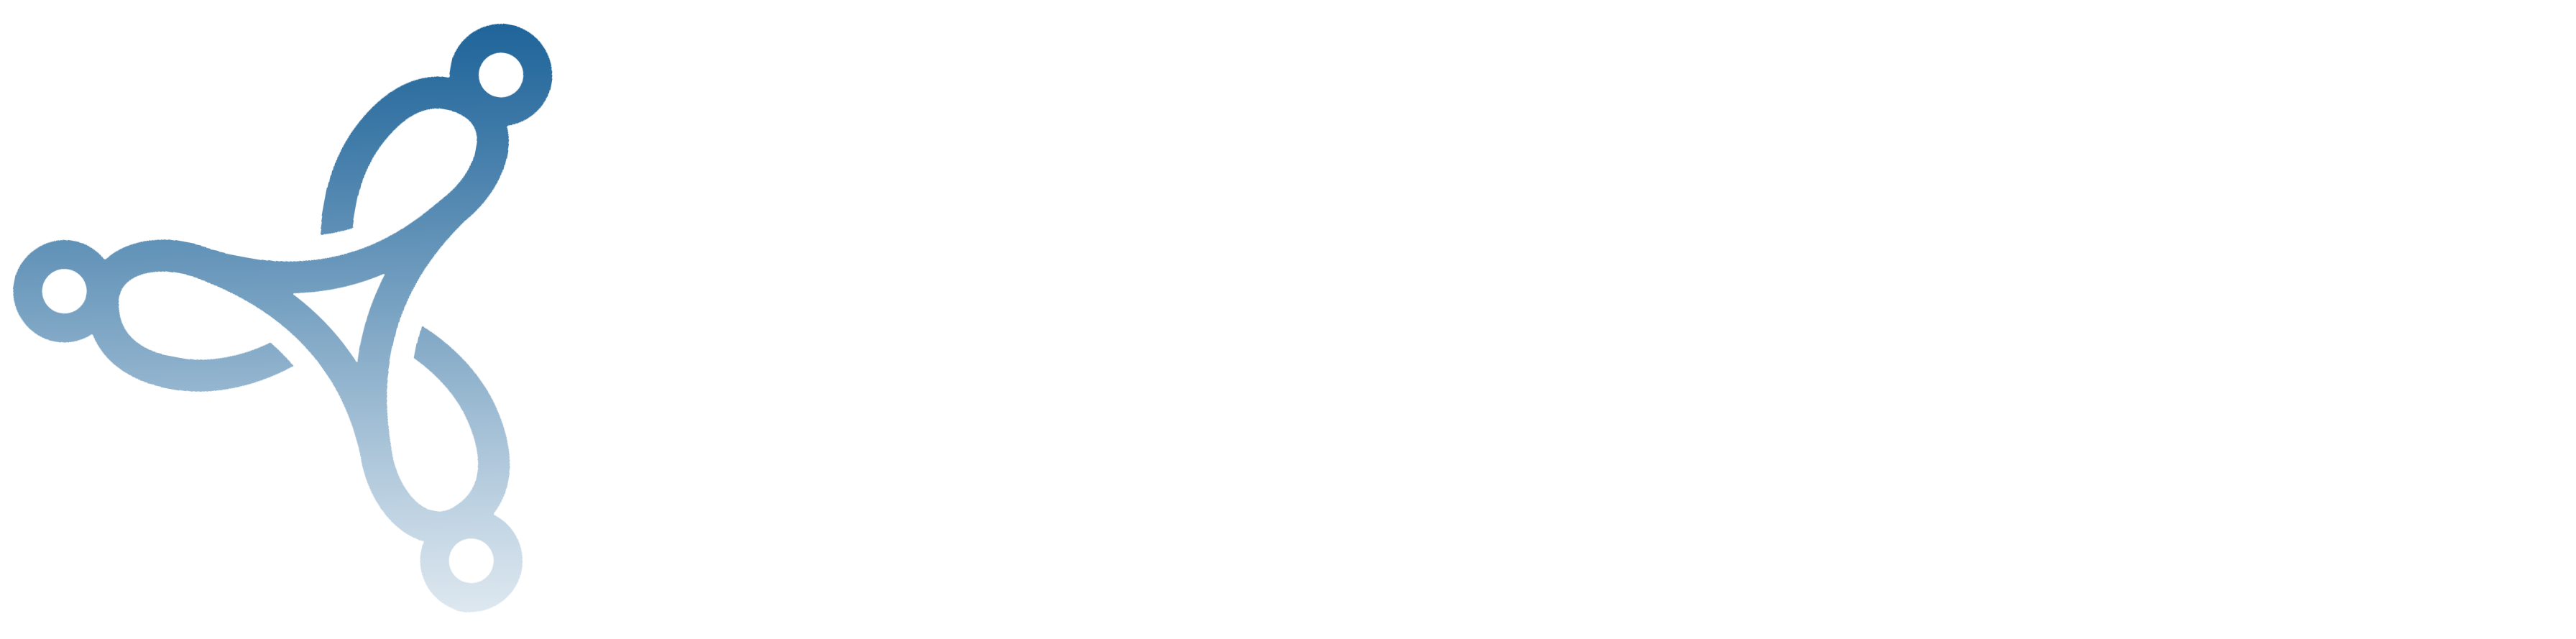 Alliance IT - Information Technology